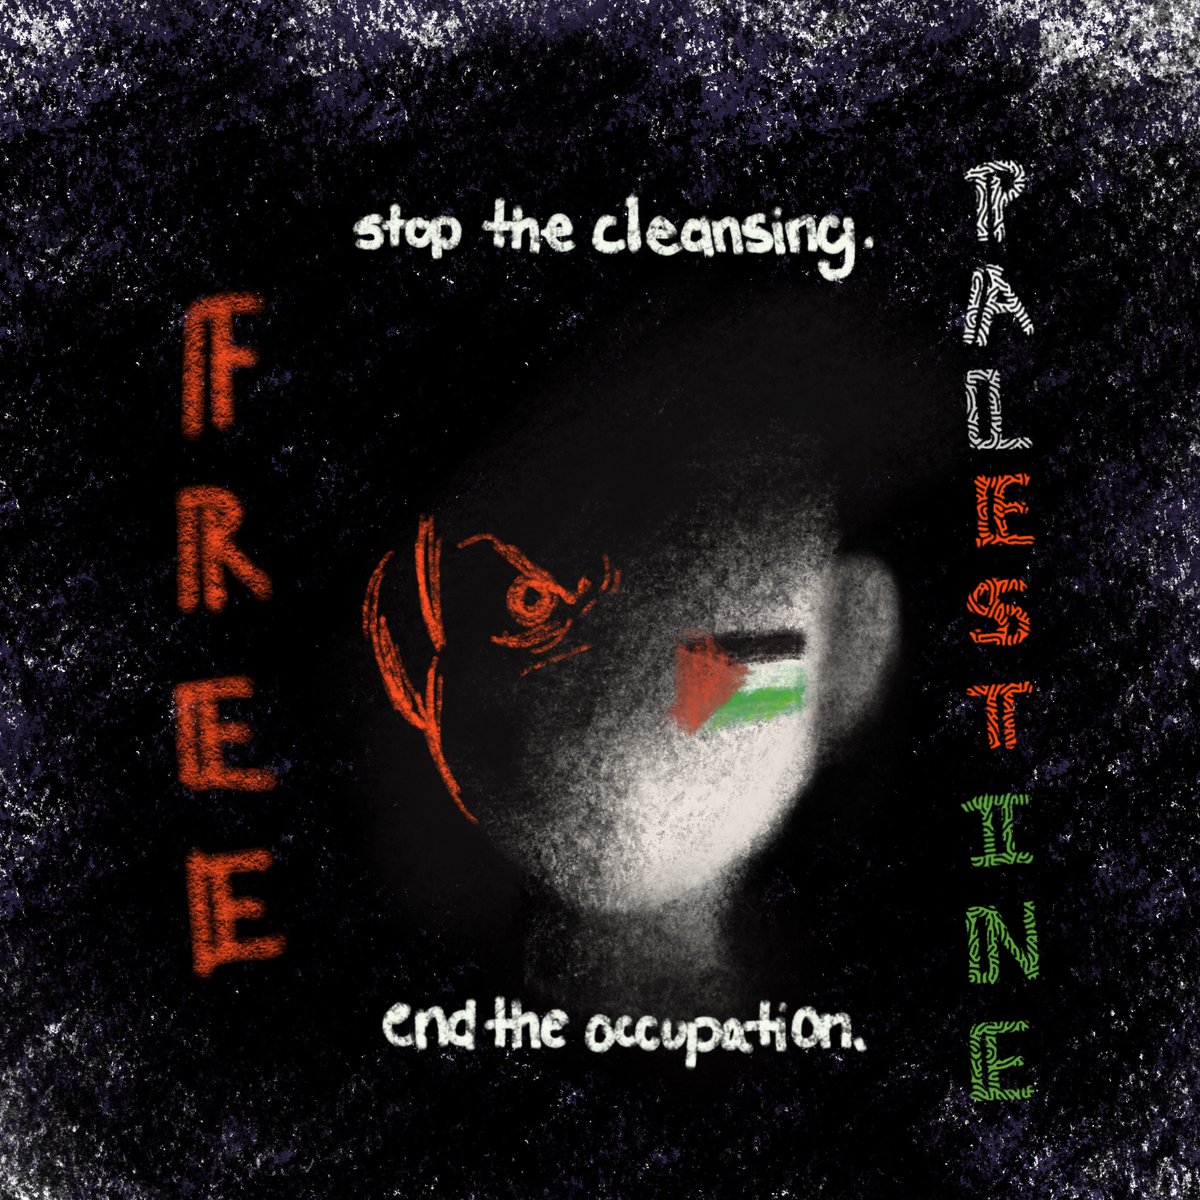 FREE PALESTINE. 🇵🇸❤️ #FreePalestine #ArtForPalestine #FreeGaza #FreeWestBank #FreeNorthBank #StrikeForPalestine #BoycottForPalestine #EndTheGenocide #EndTheOccupationNow #EndEthnicCleansing #LiberatePalestine